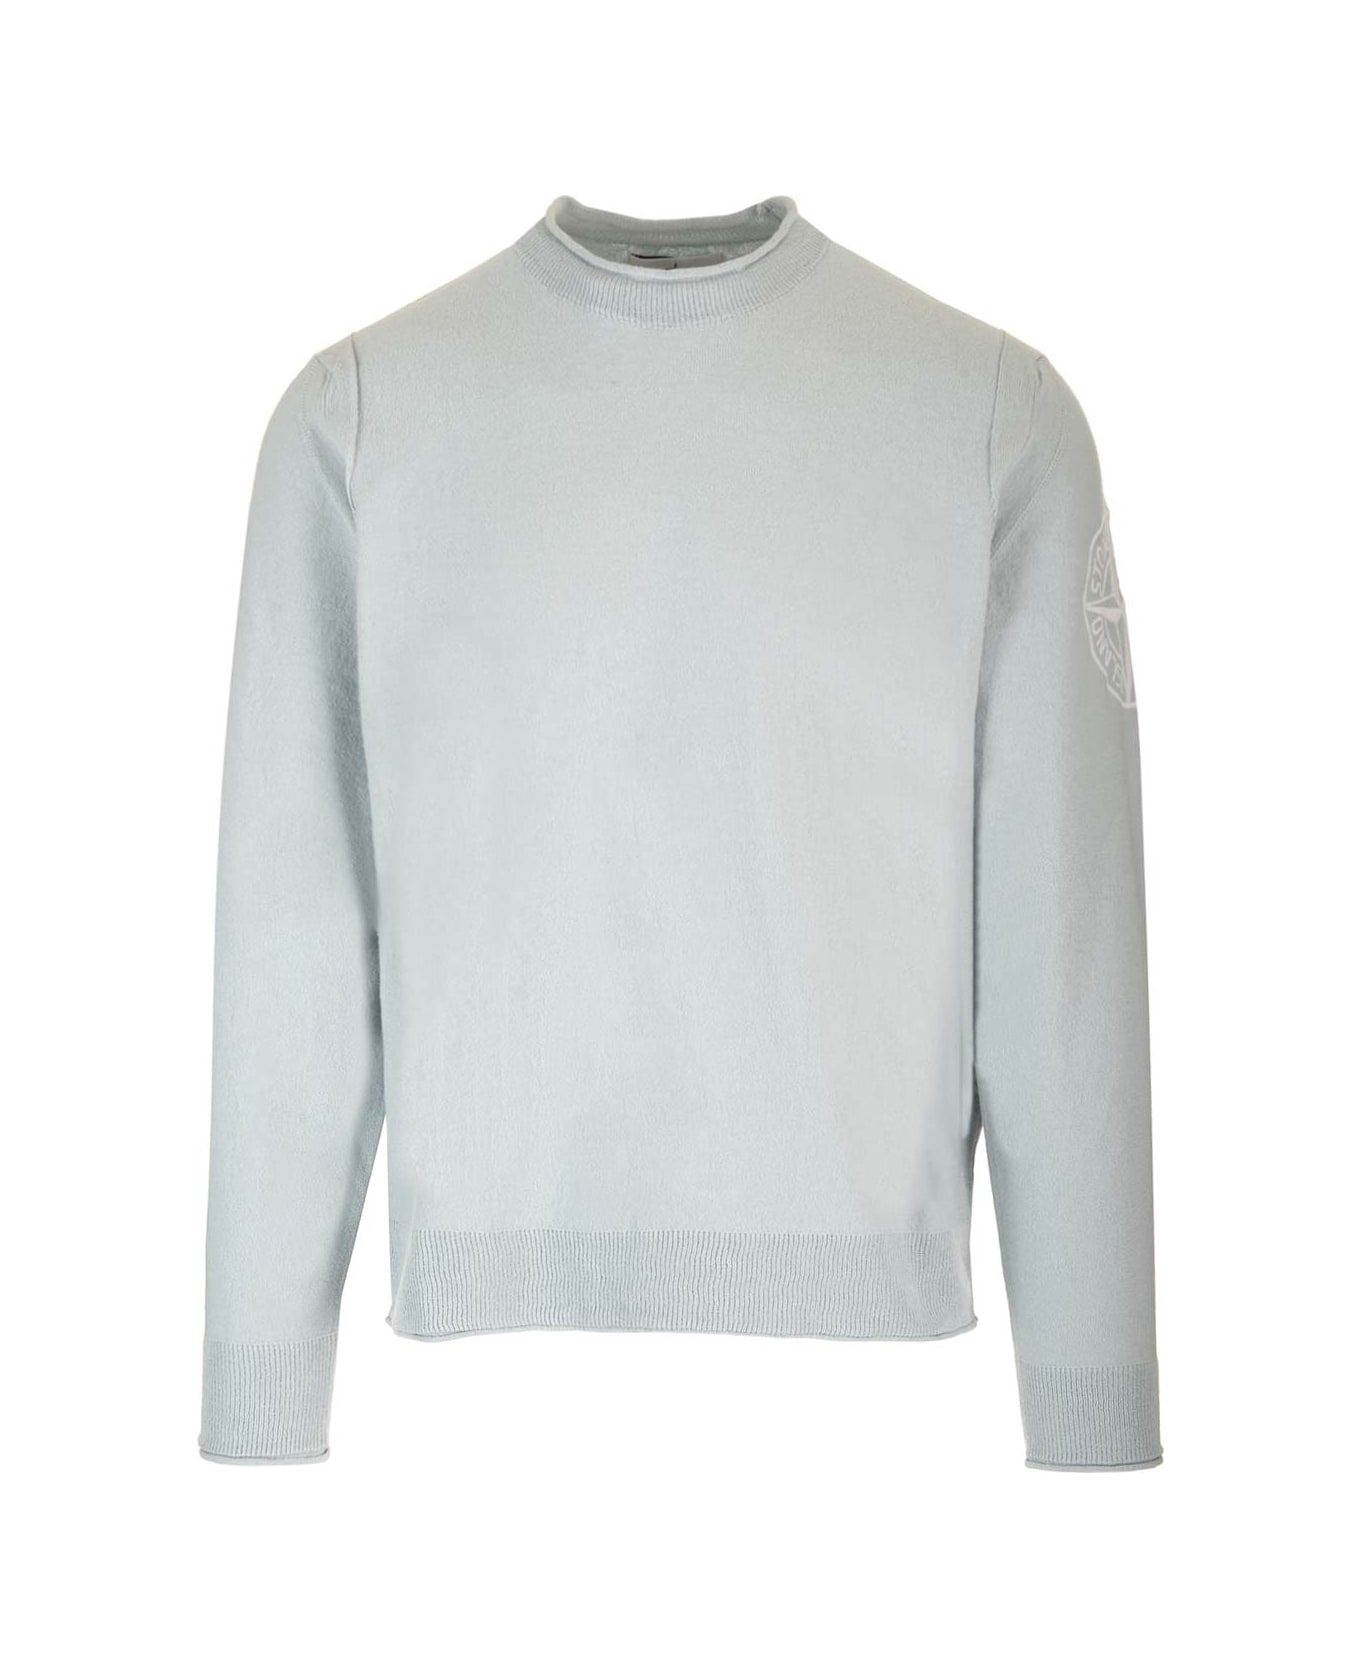 Stone Island Cotton Sweater - Light blue